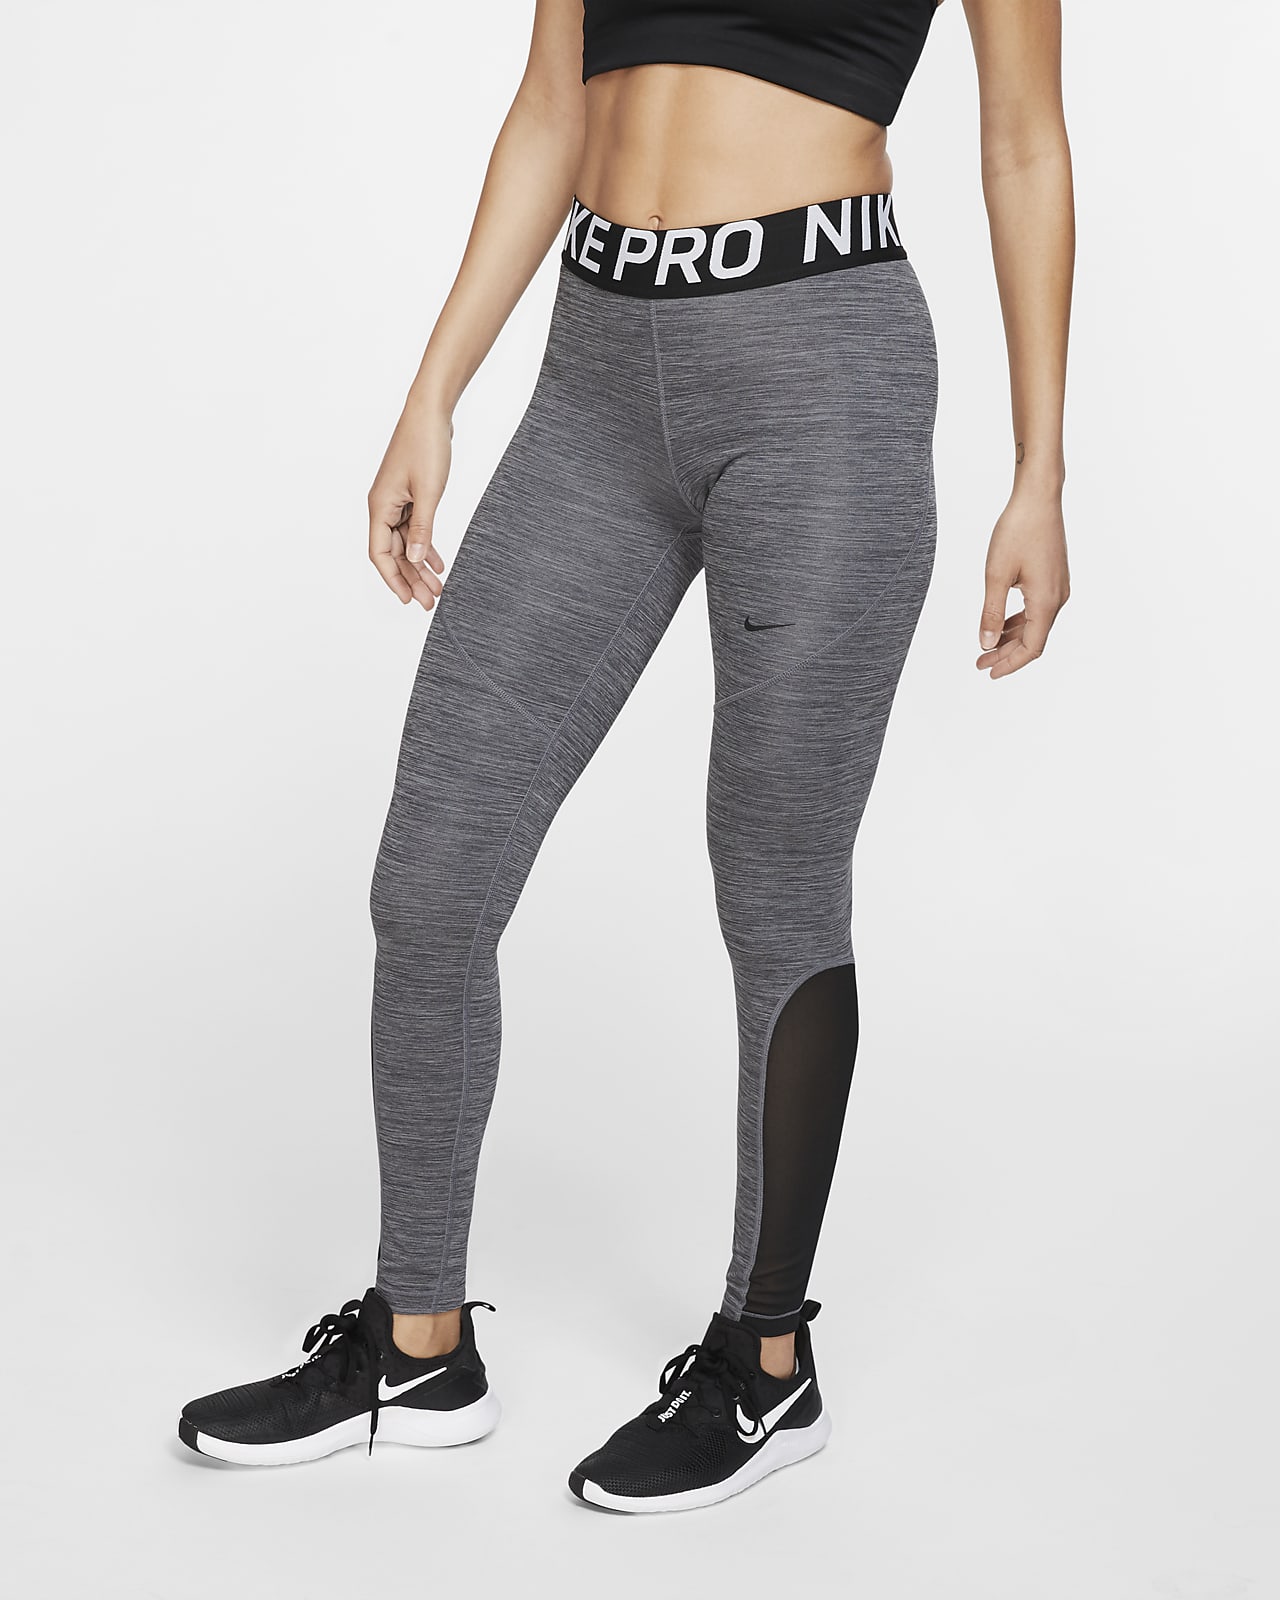 nike pro leggings women's gray